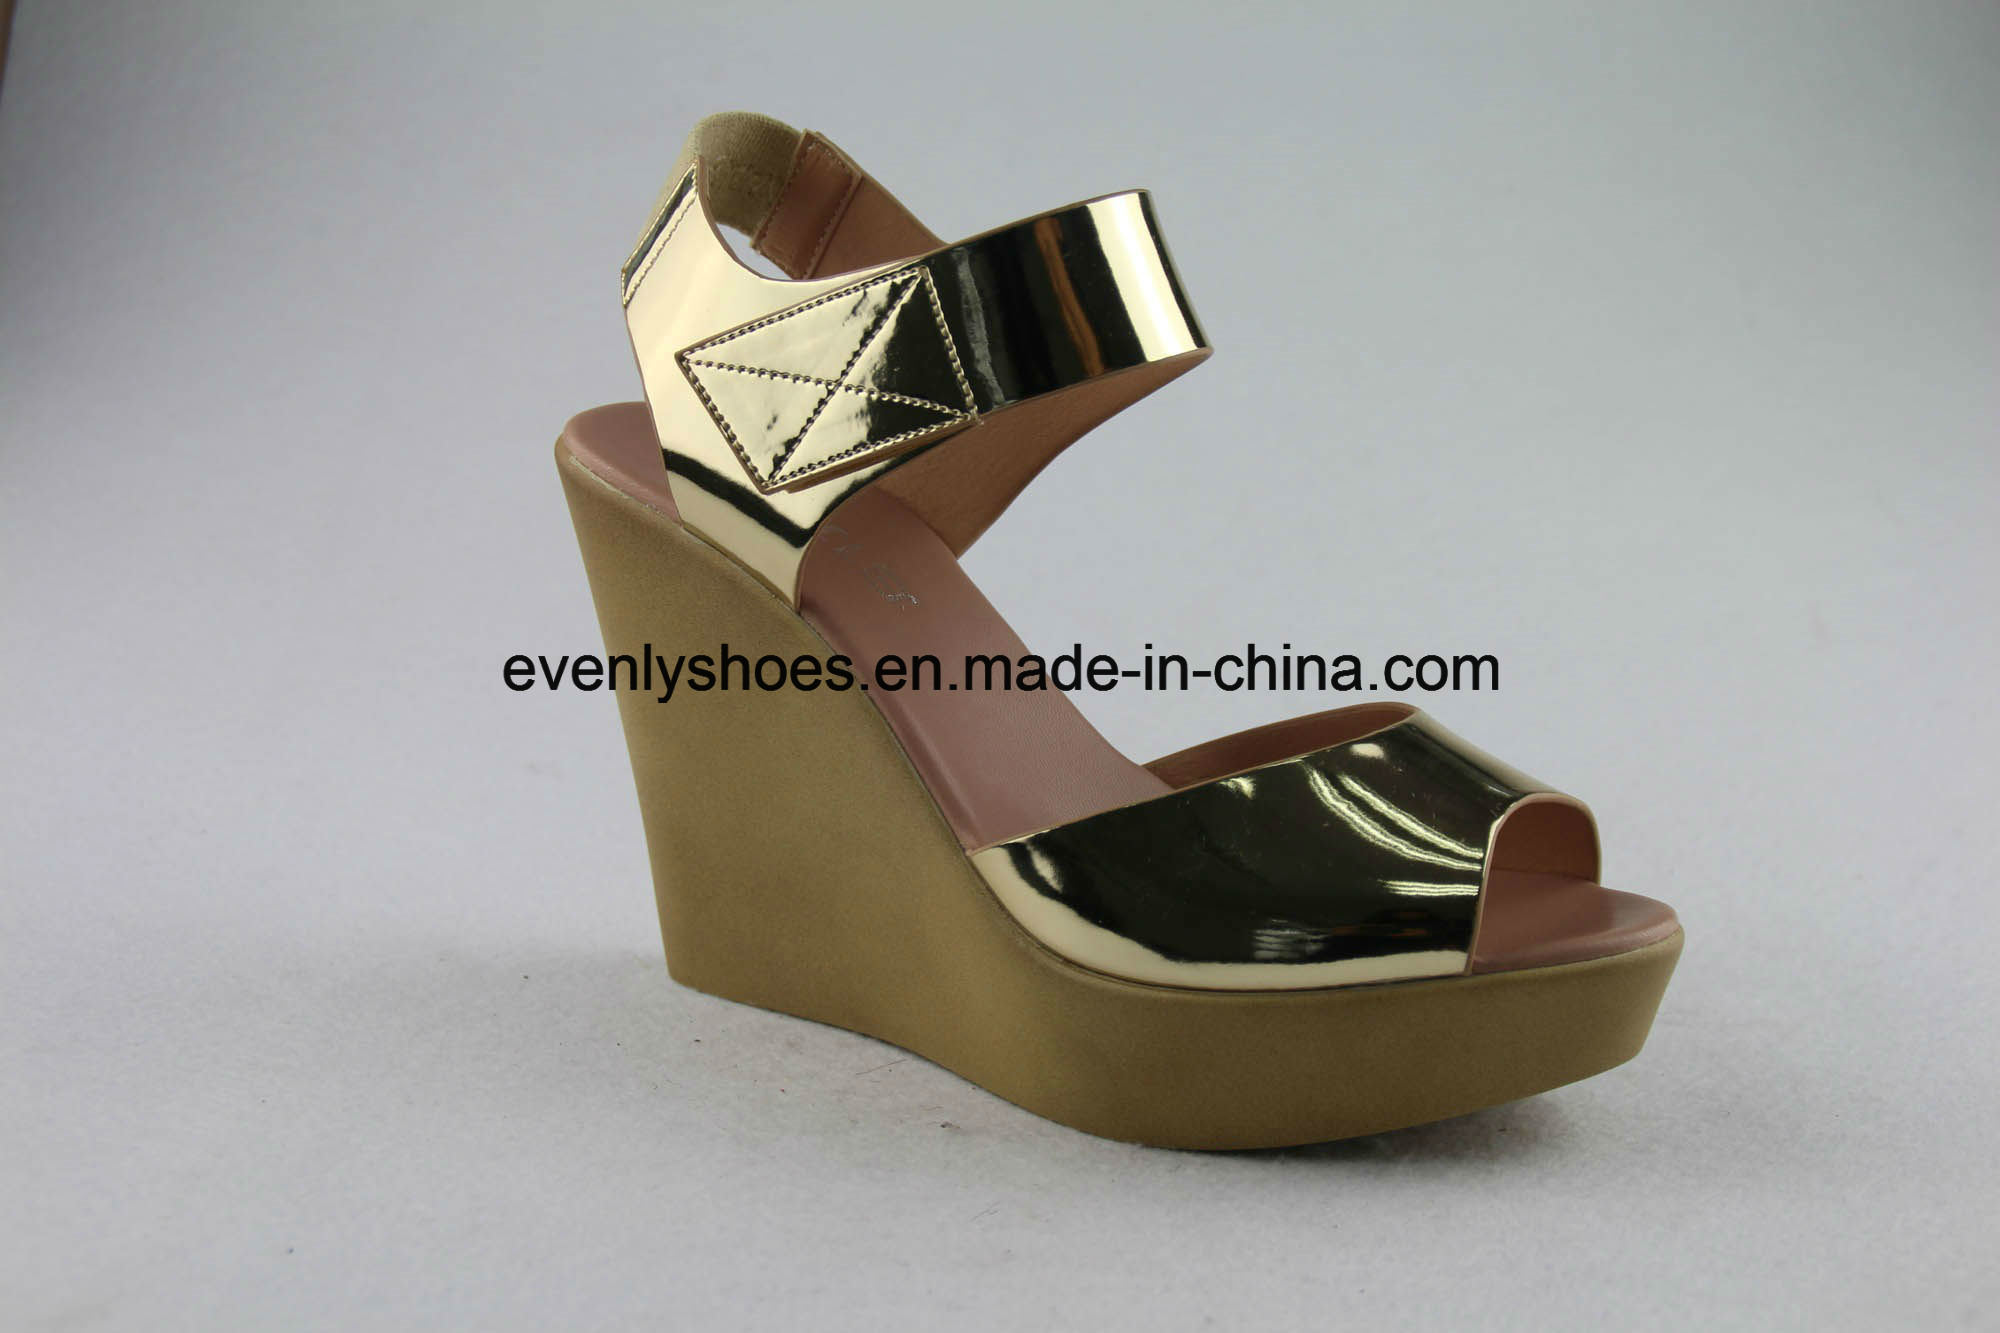 Glory Glod Women Fashion Sandal with Platform Design